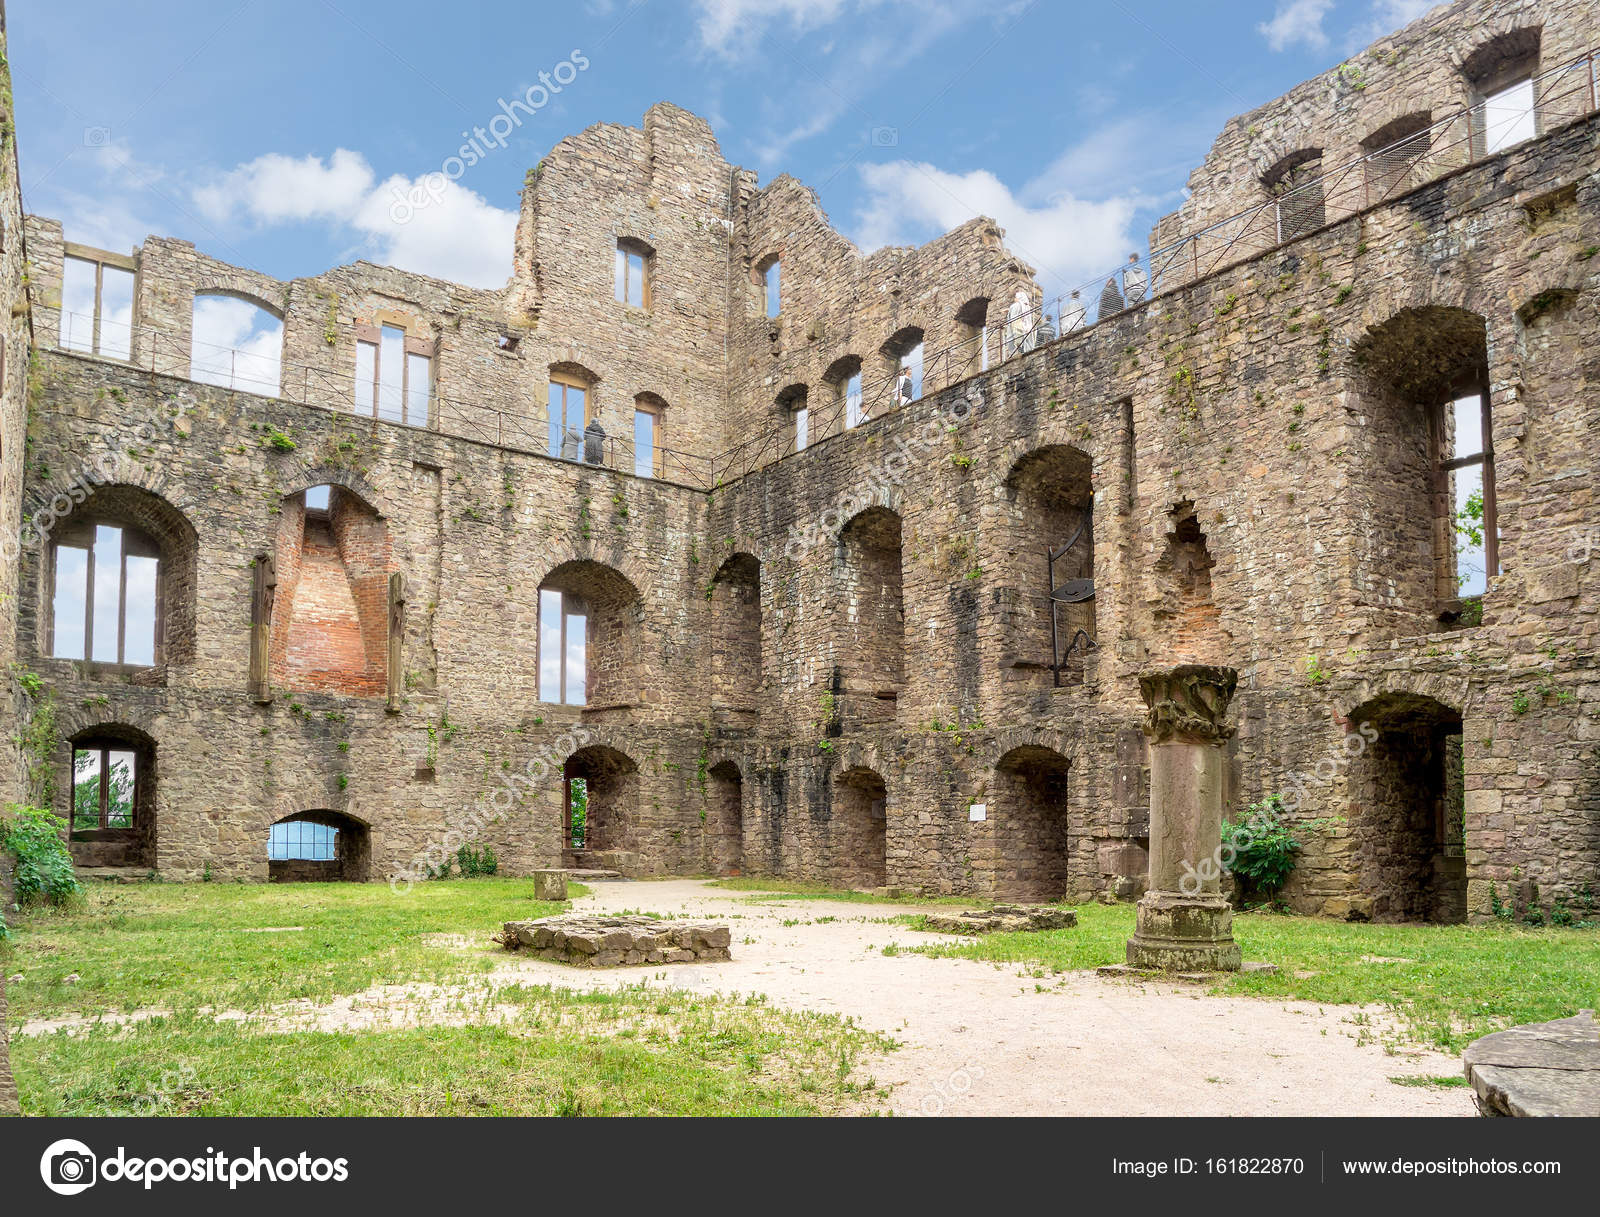 Old Castle ruins, Baden-Baden, Germany — Stock Photo © g215 #161822870